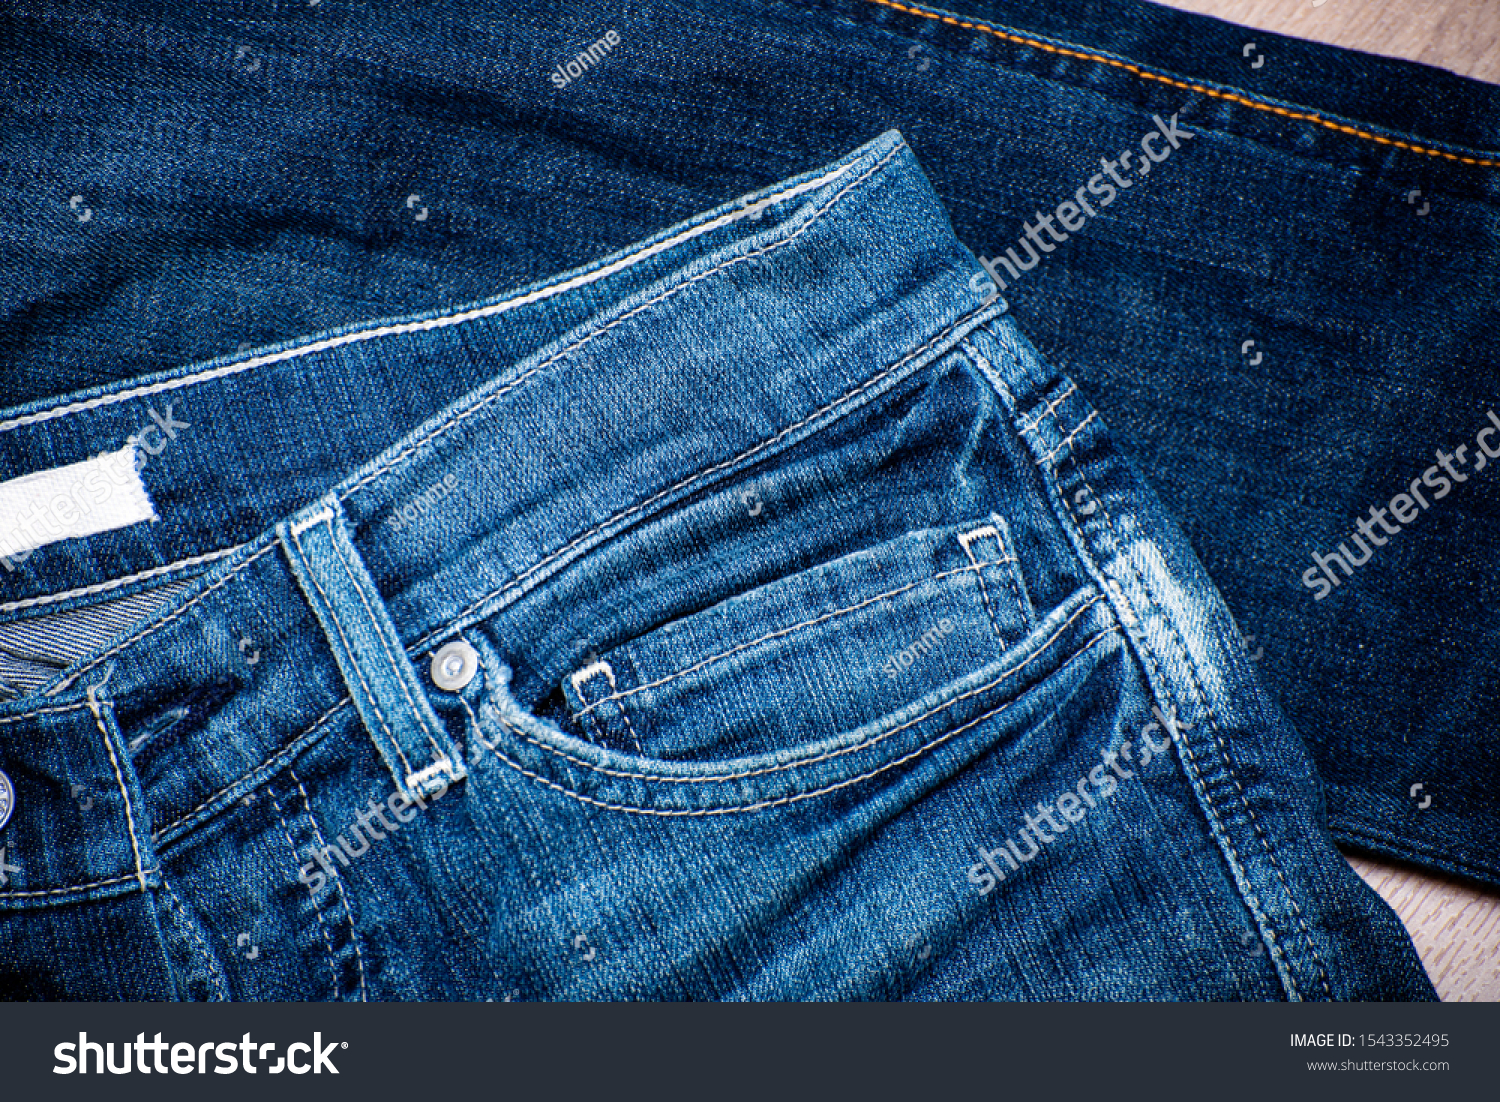 Denim. jeans texture. Jeans background. Denim jeans texture or denim jeans background #1543352495